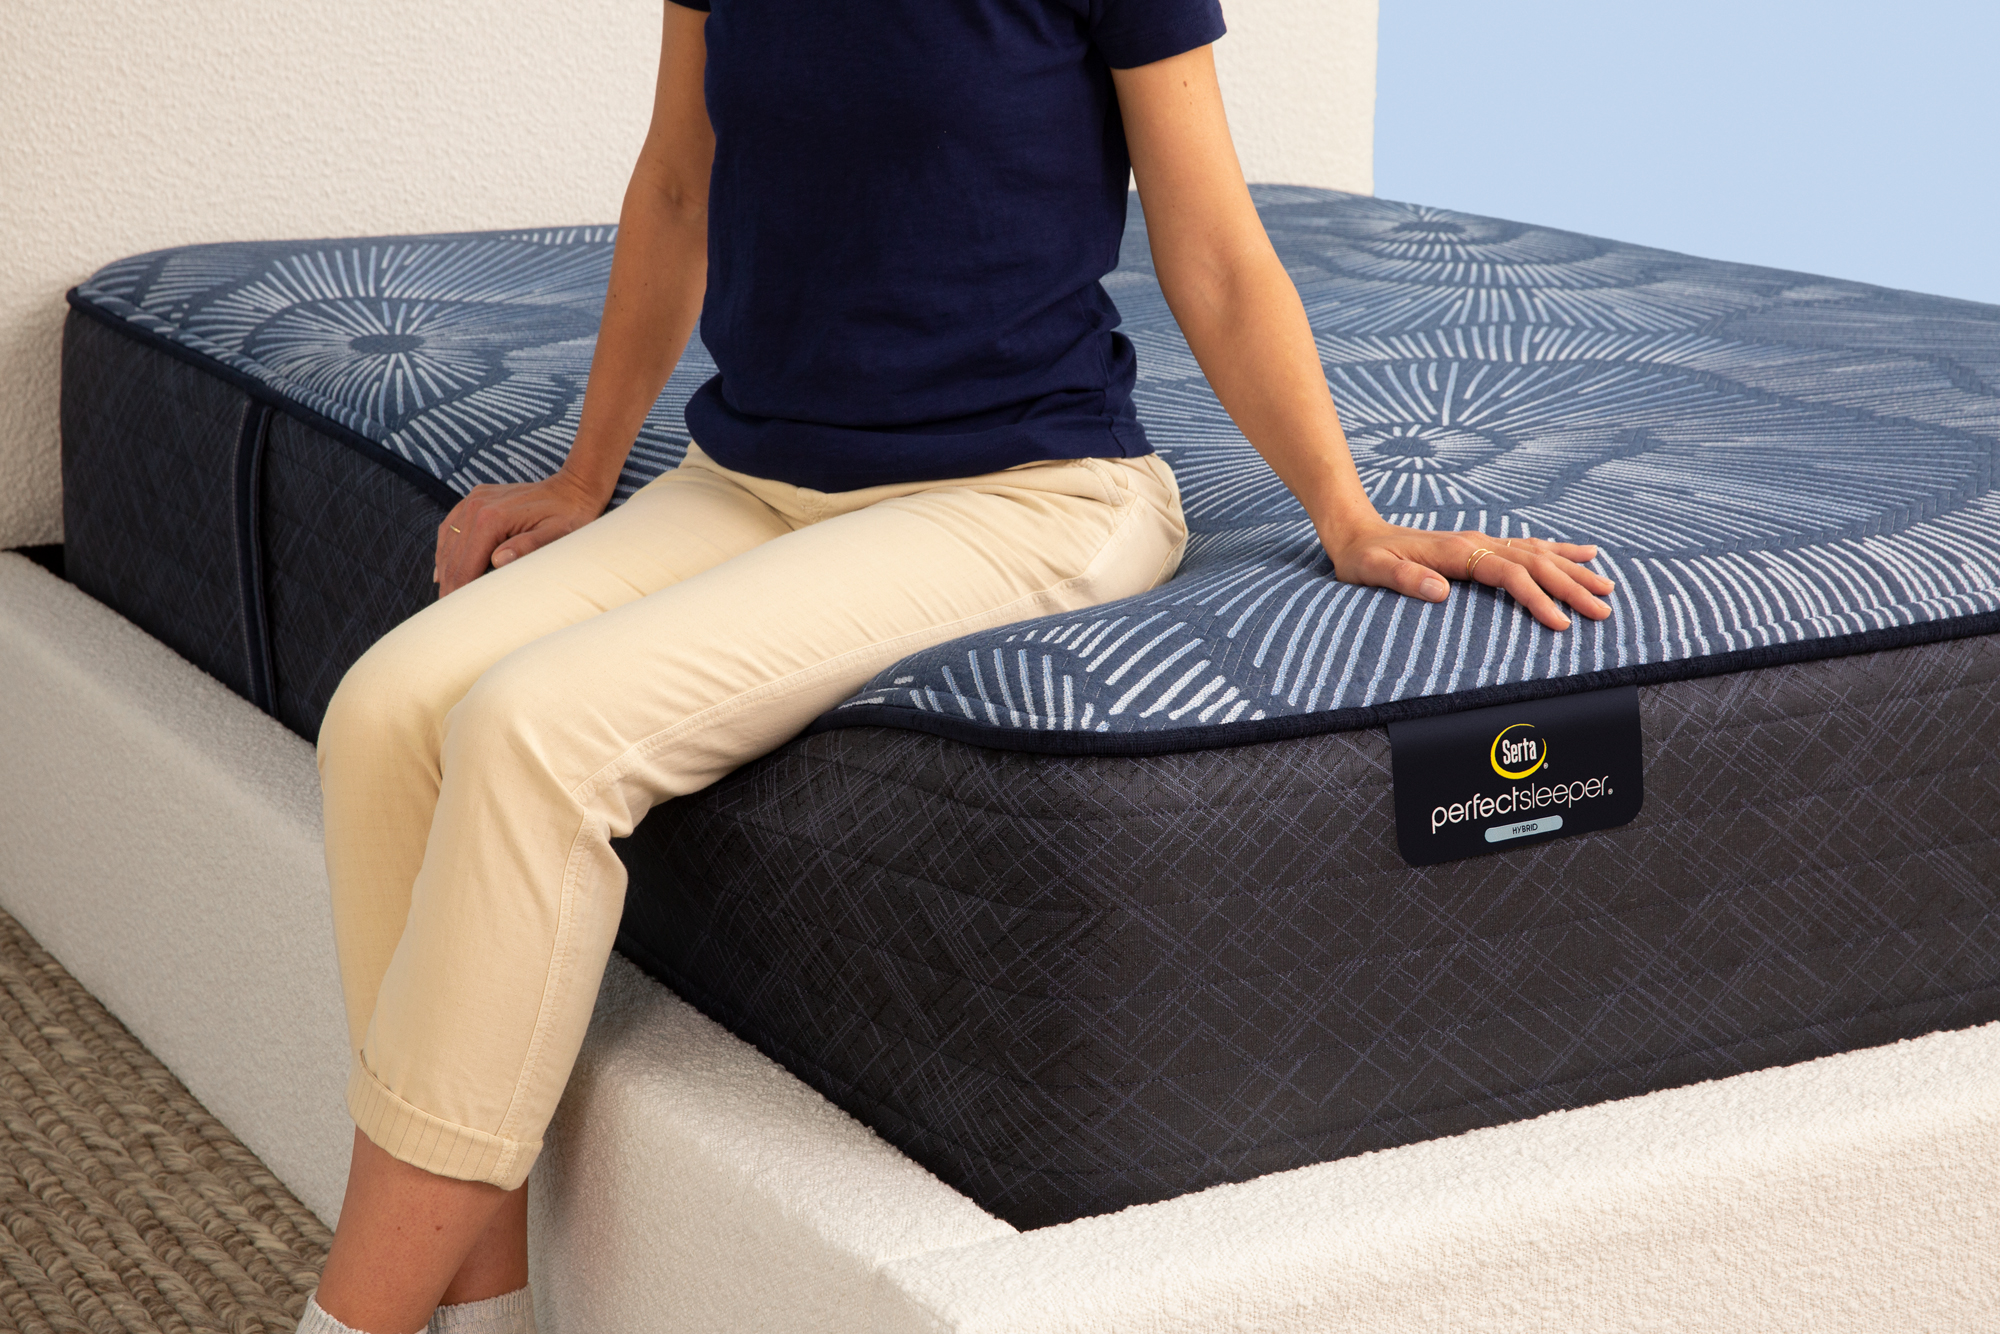 Photo of the Serta Perfect Sleeper Euphoric Nights Hybrid Plush mattress.